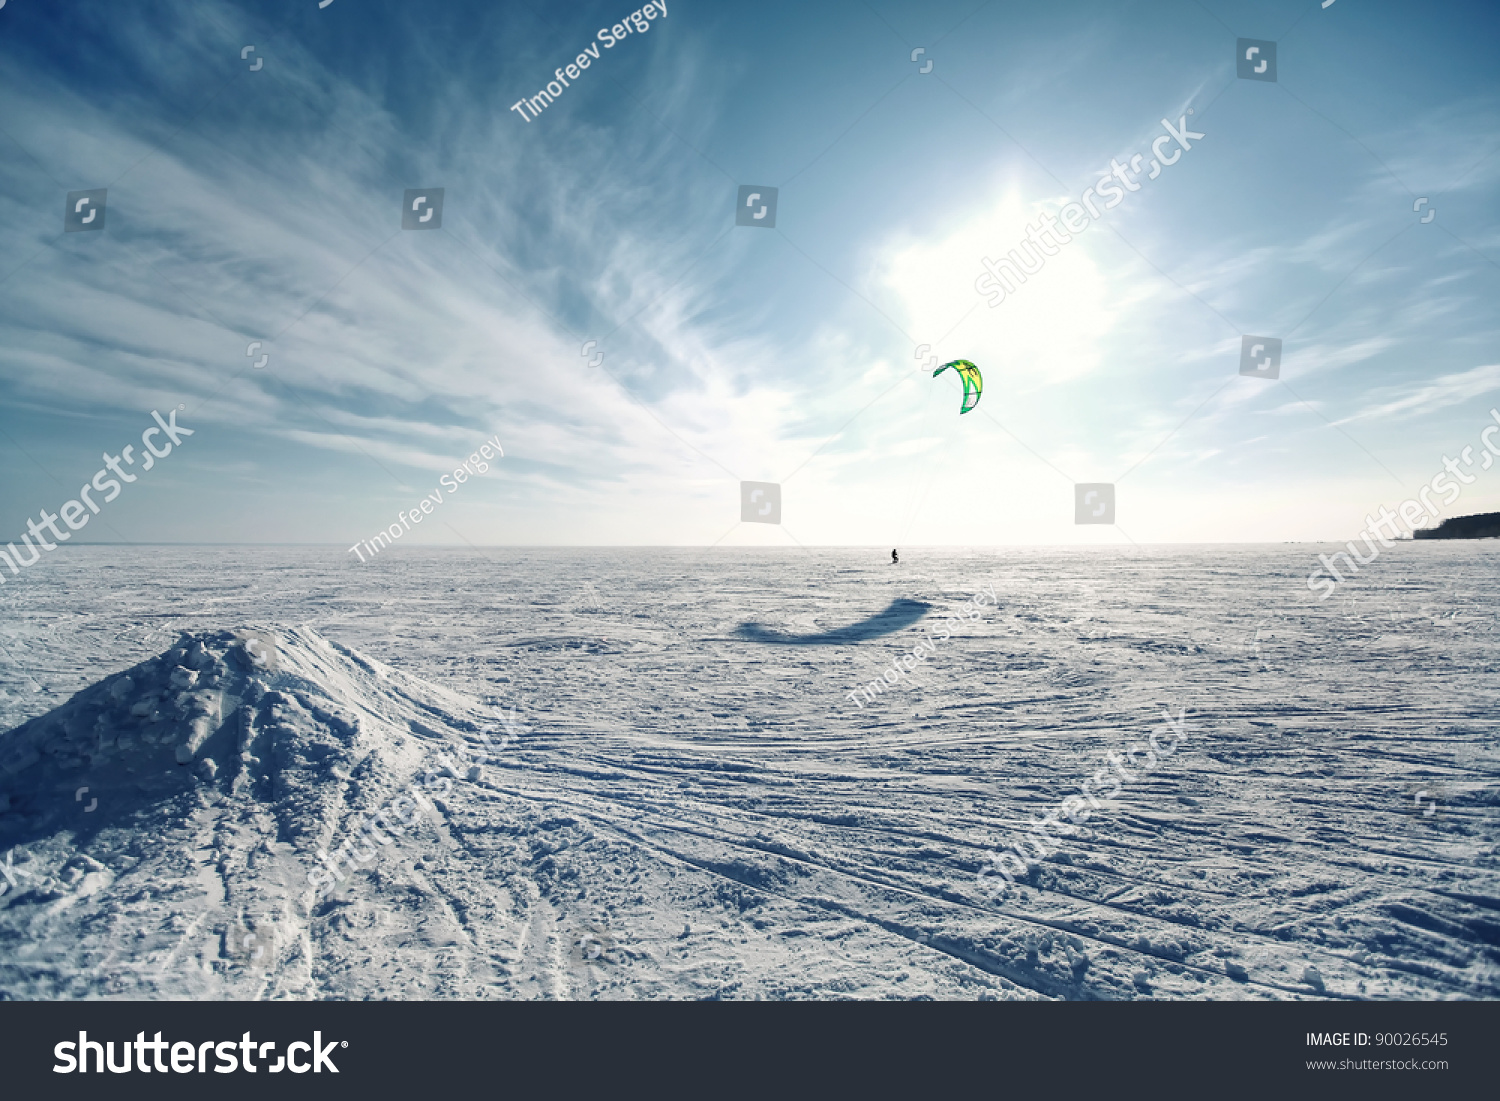 Ski kiting on a frozen lake #90026545